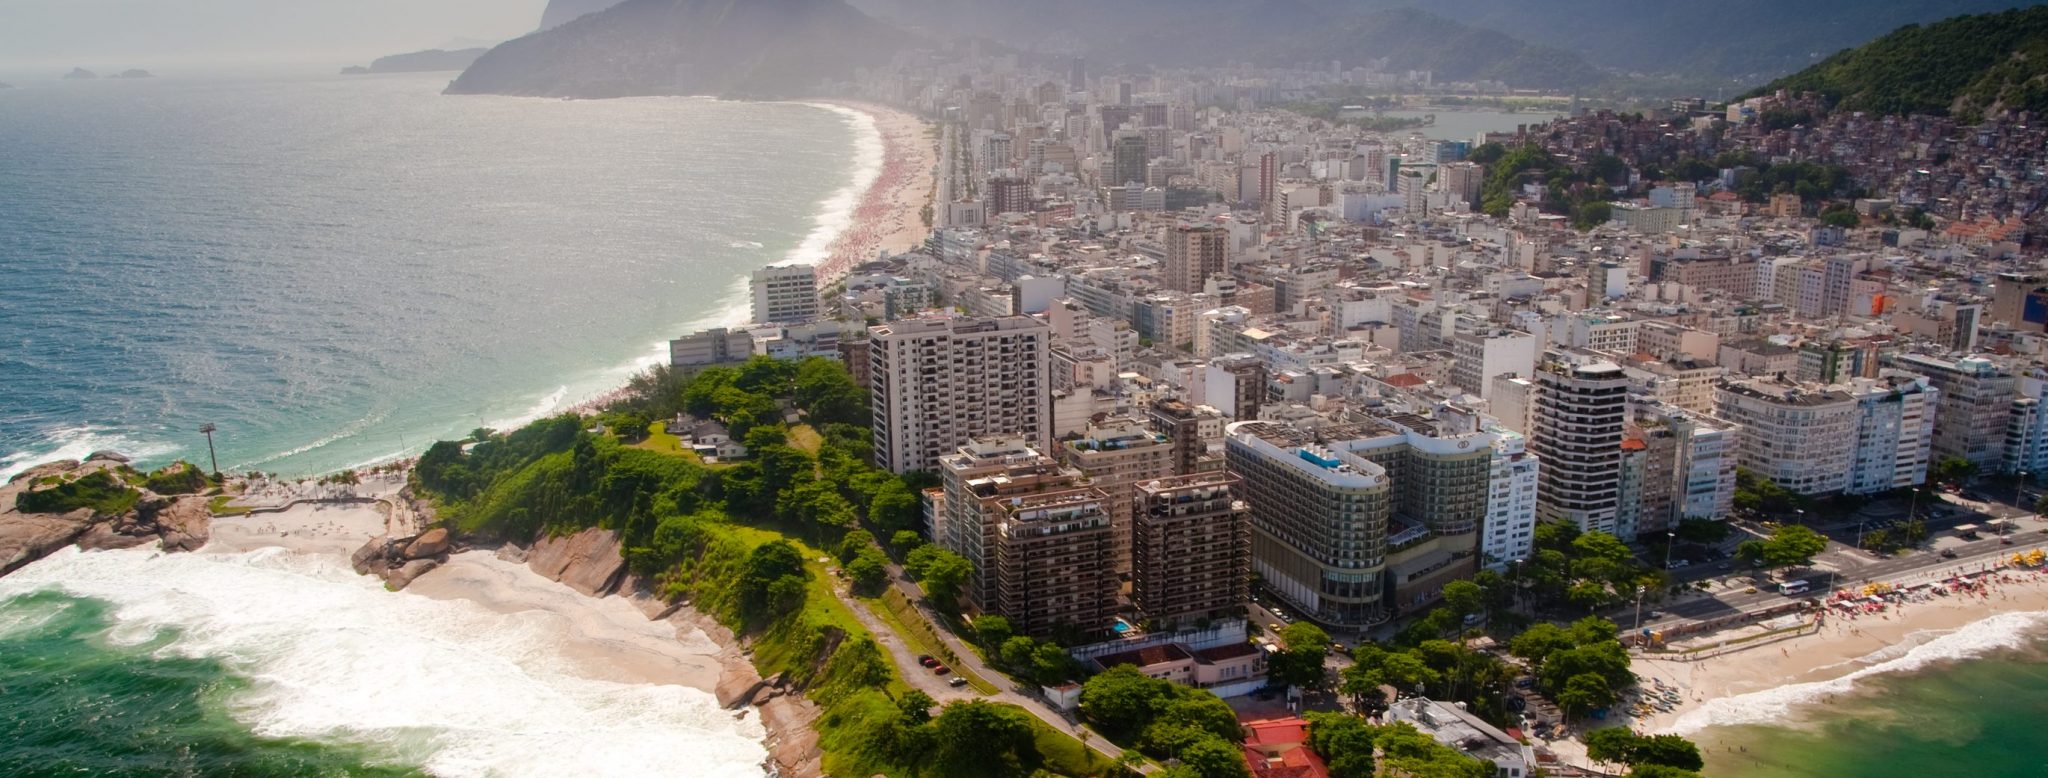 Brazil, Uruguay & Argentina - A Tale of Three Cities: Rio de Janeiro ...